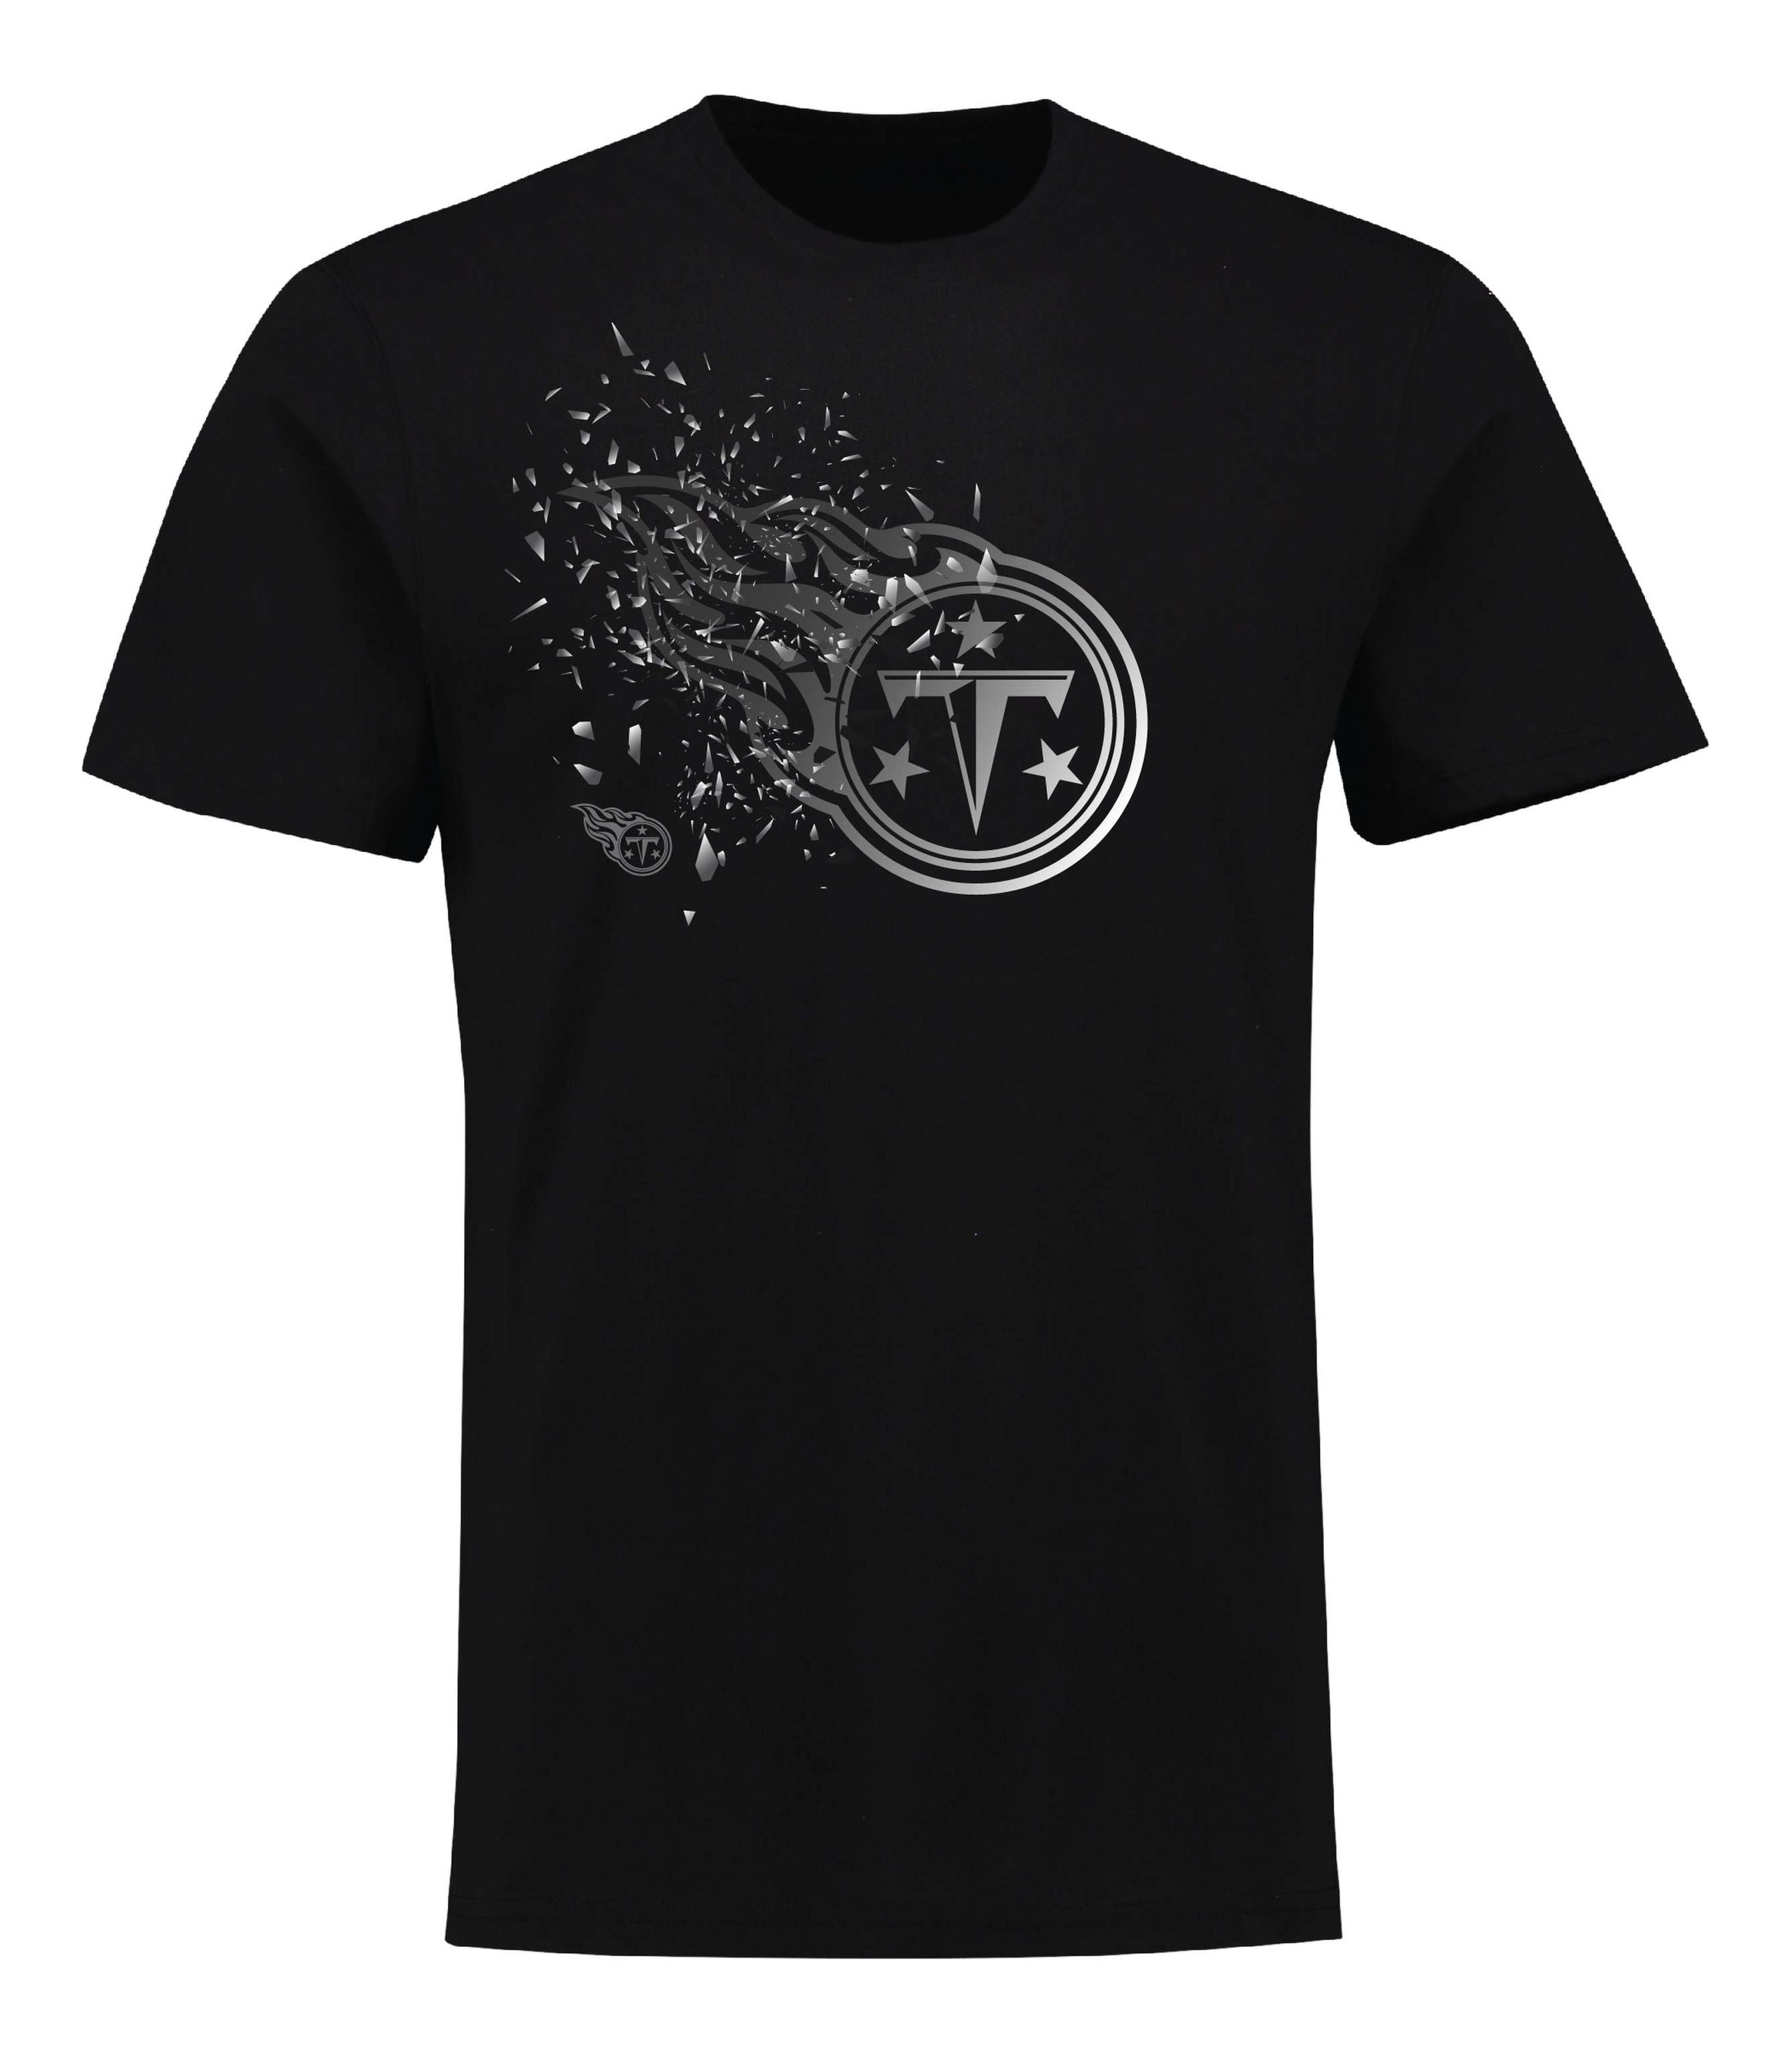 Fanatics - NFL Tennessee Titans Shatter Graphic T-Shirt - Schwarz